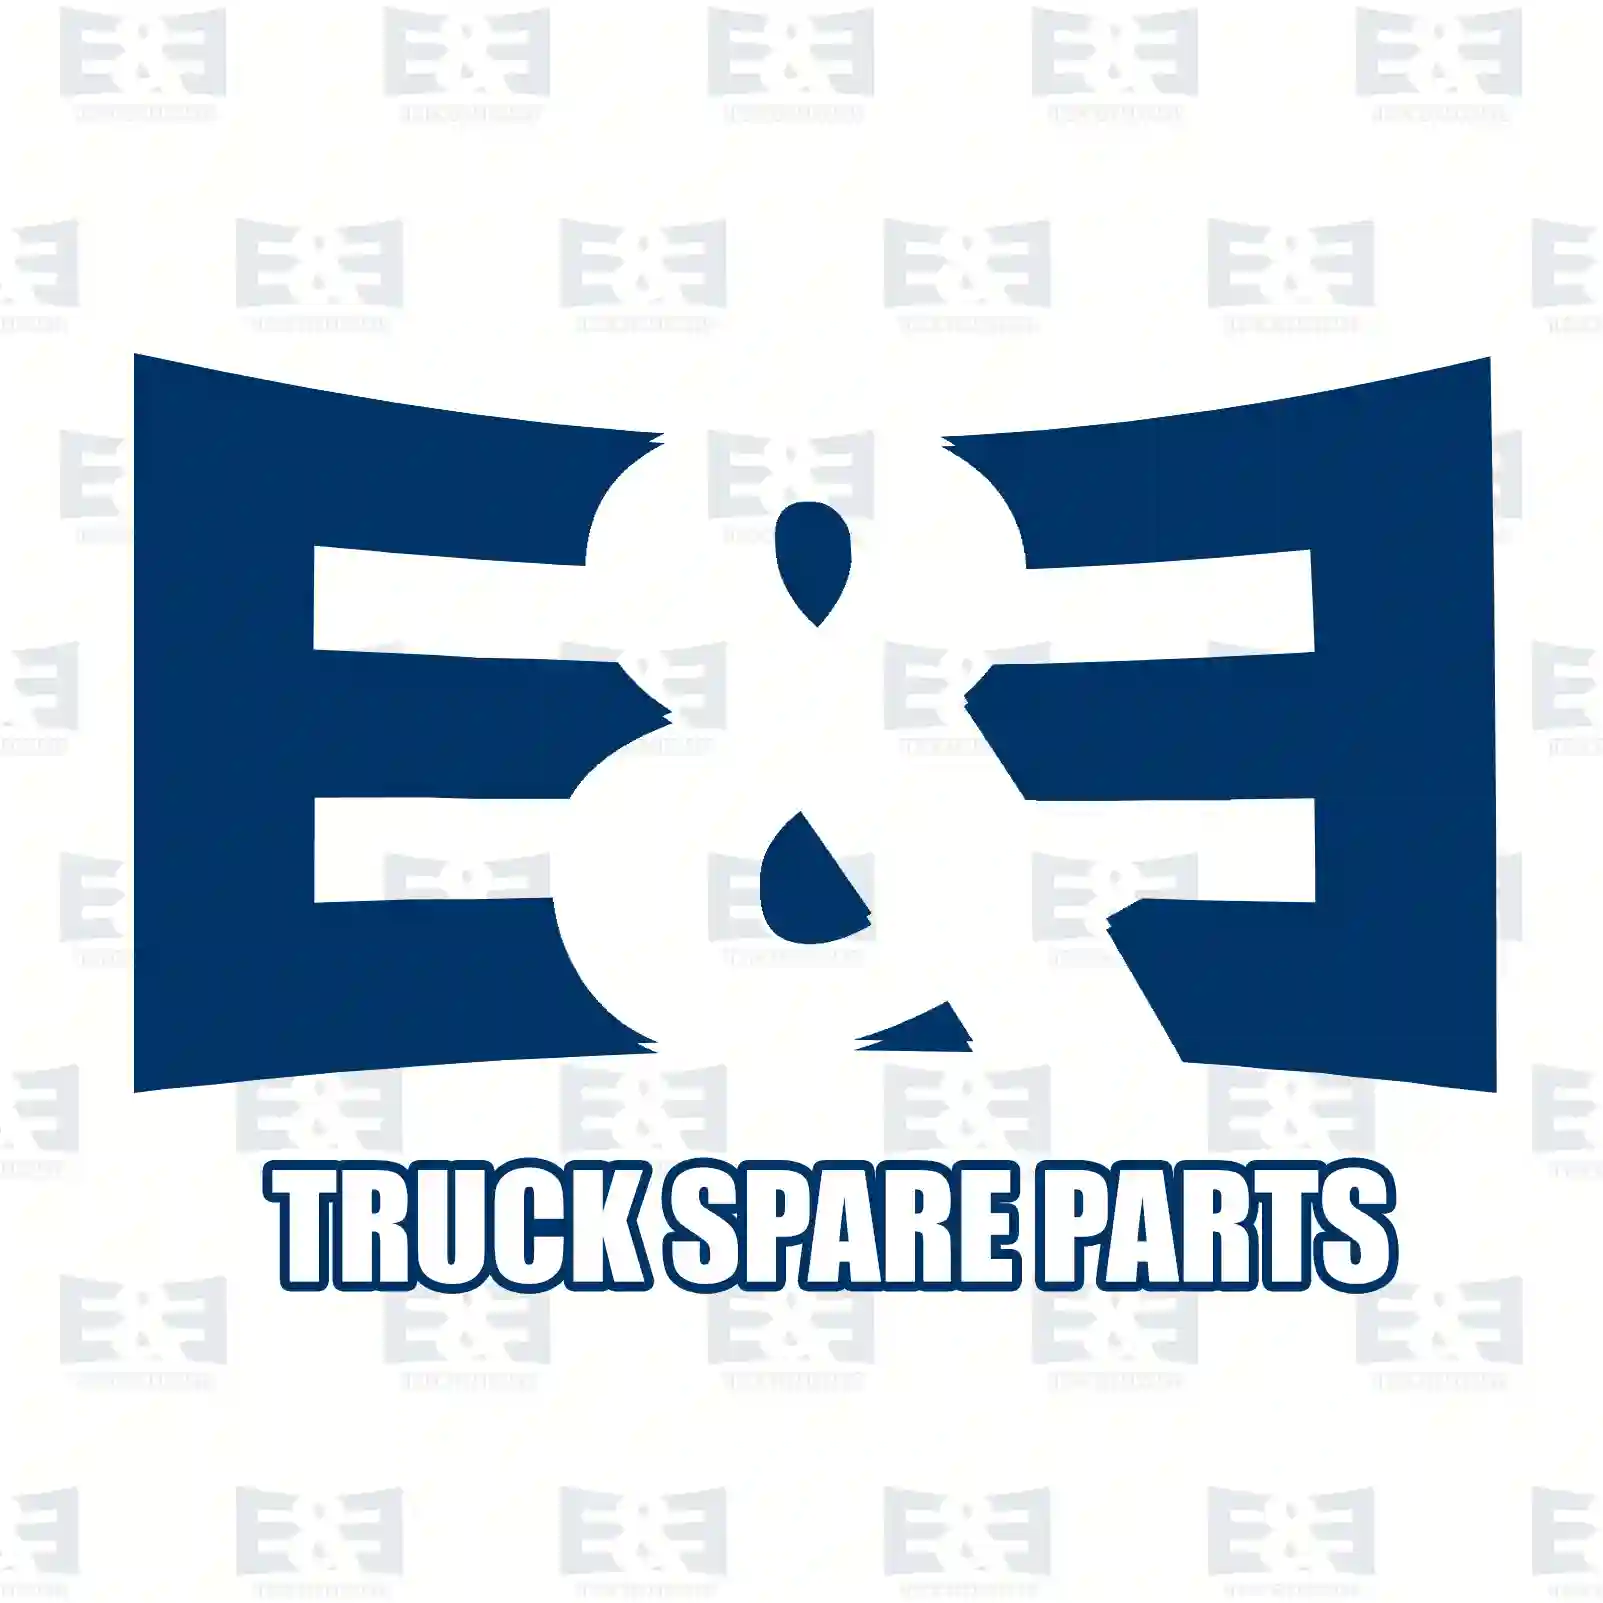 Disc brake pad kit, 2E2294806, 1660384, 1668053, 6204677, 87DB-2K021-BA, 87DB-2K021-BB, 87DB-2K021-BC, 270530, 270901, 271190, 279001, 3090048, 30900484, 30900784, 3090784, 3098048, 6779999 ||  2E2294806 E&E Truck Spare Parts | Truck Spare Parts, Auotomotive Spare Parts Disc brake pad kit, 2E2294806, 1660384, 1668053, 6204677, 87DB-2K021-BA, 87DB-2K021-BB, 87DB-2K021-BC, 270530, 270901, 271190, 279001, 3090048, 30900484, 30900784, 3090784, 3098048, 6779999 ||  2E2294806 E&E Truck Spare Parts | Truck Spare Parts, Auotomotive Spare Parts